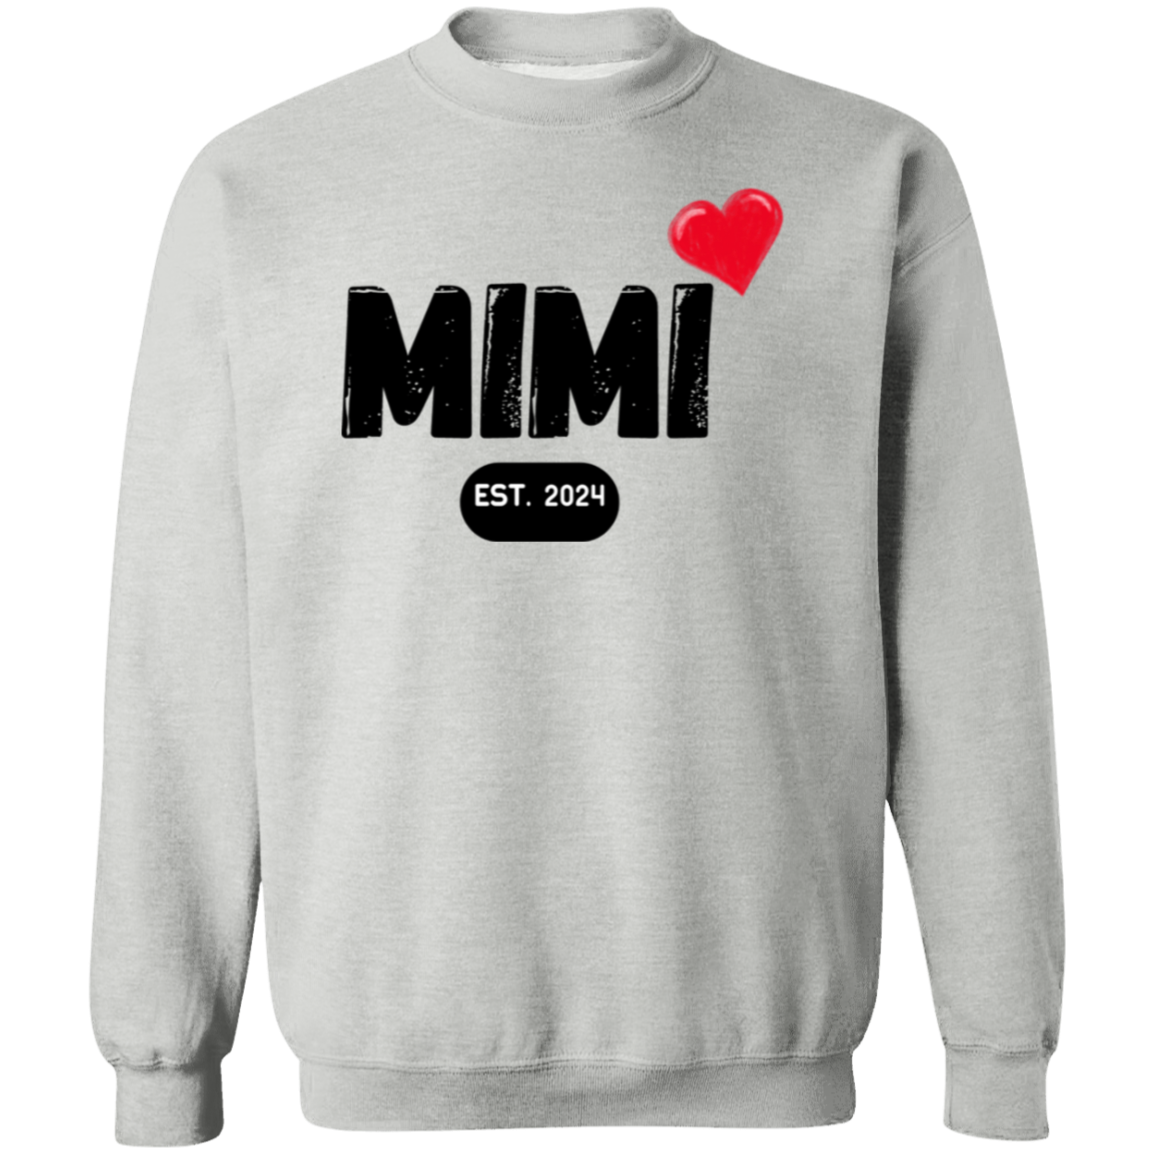 Mimi EST. 2024 Crewneck Pullover Sweatshirt